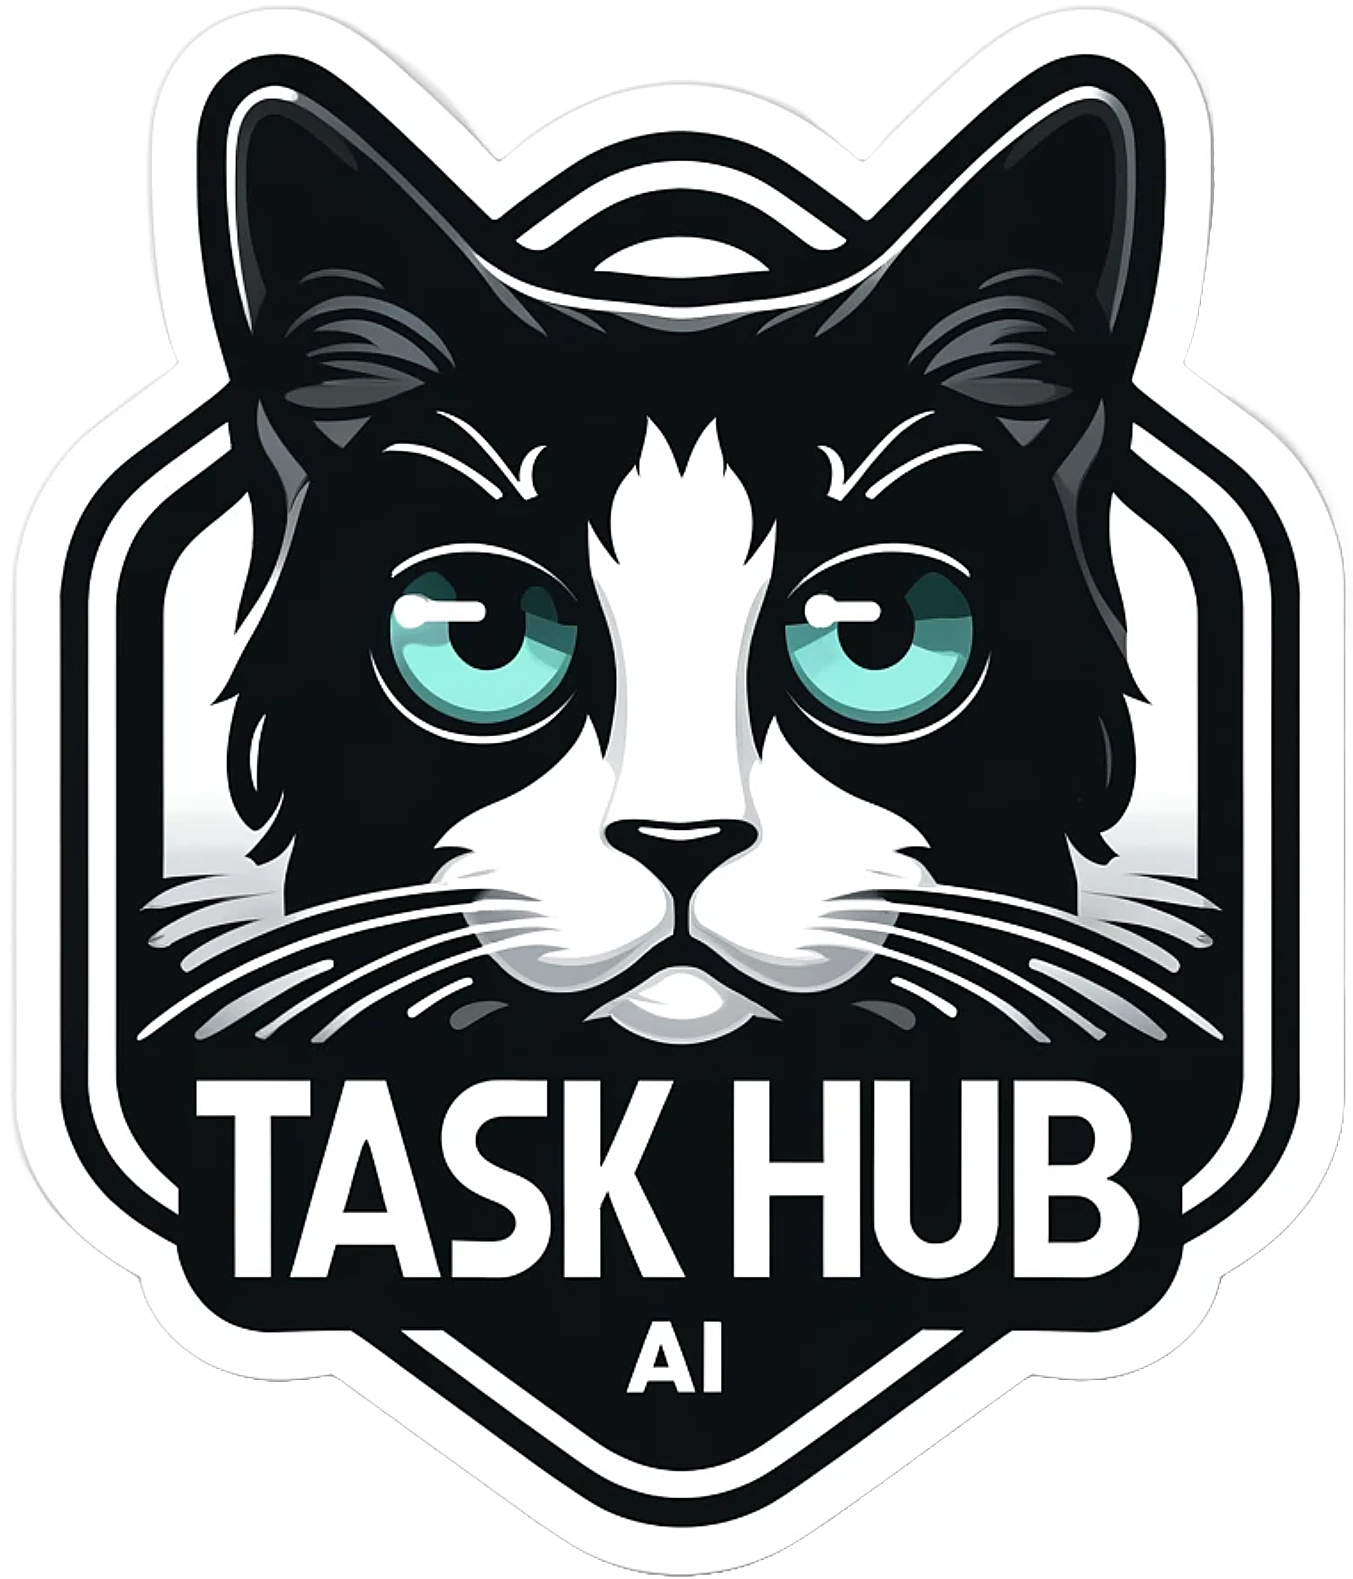 Task Hub AI